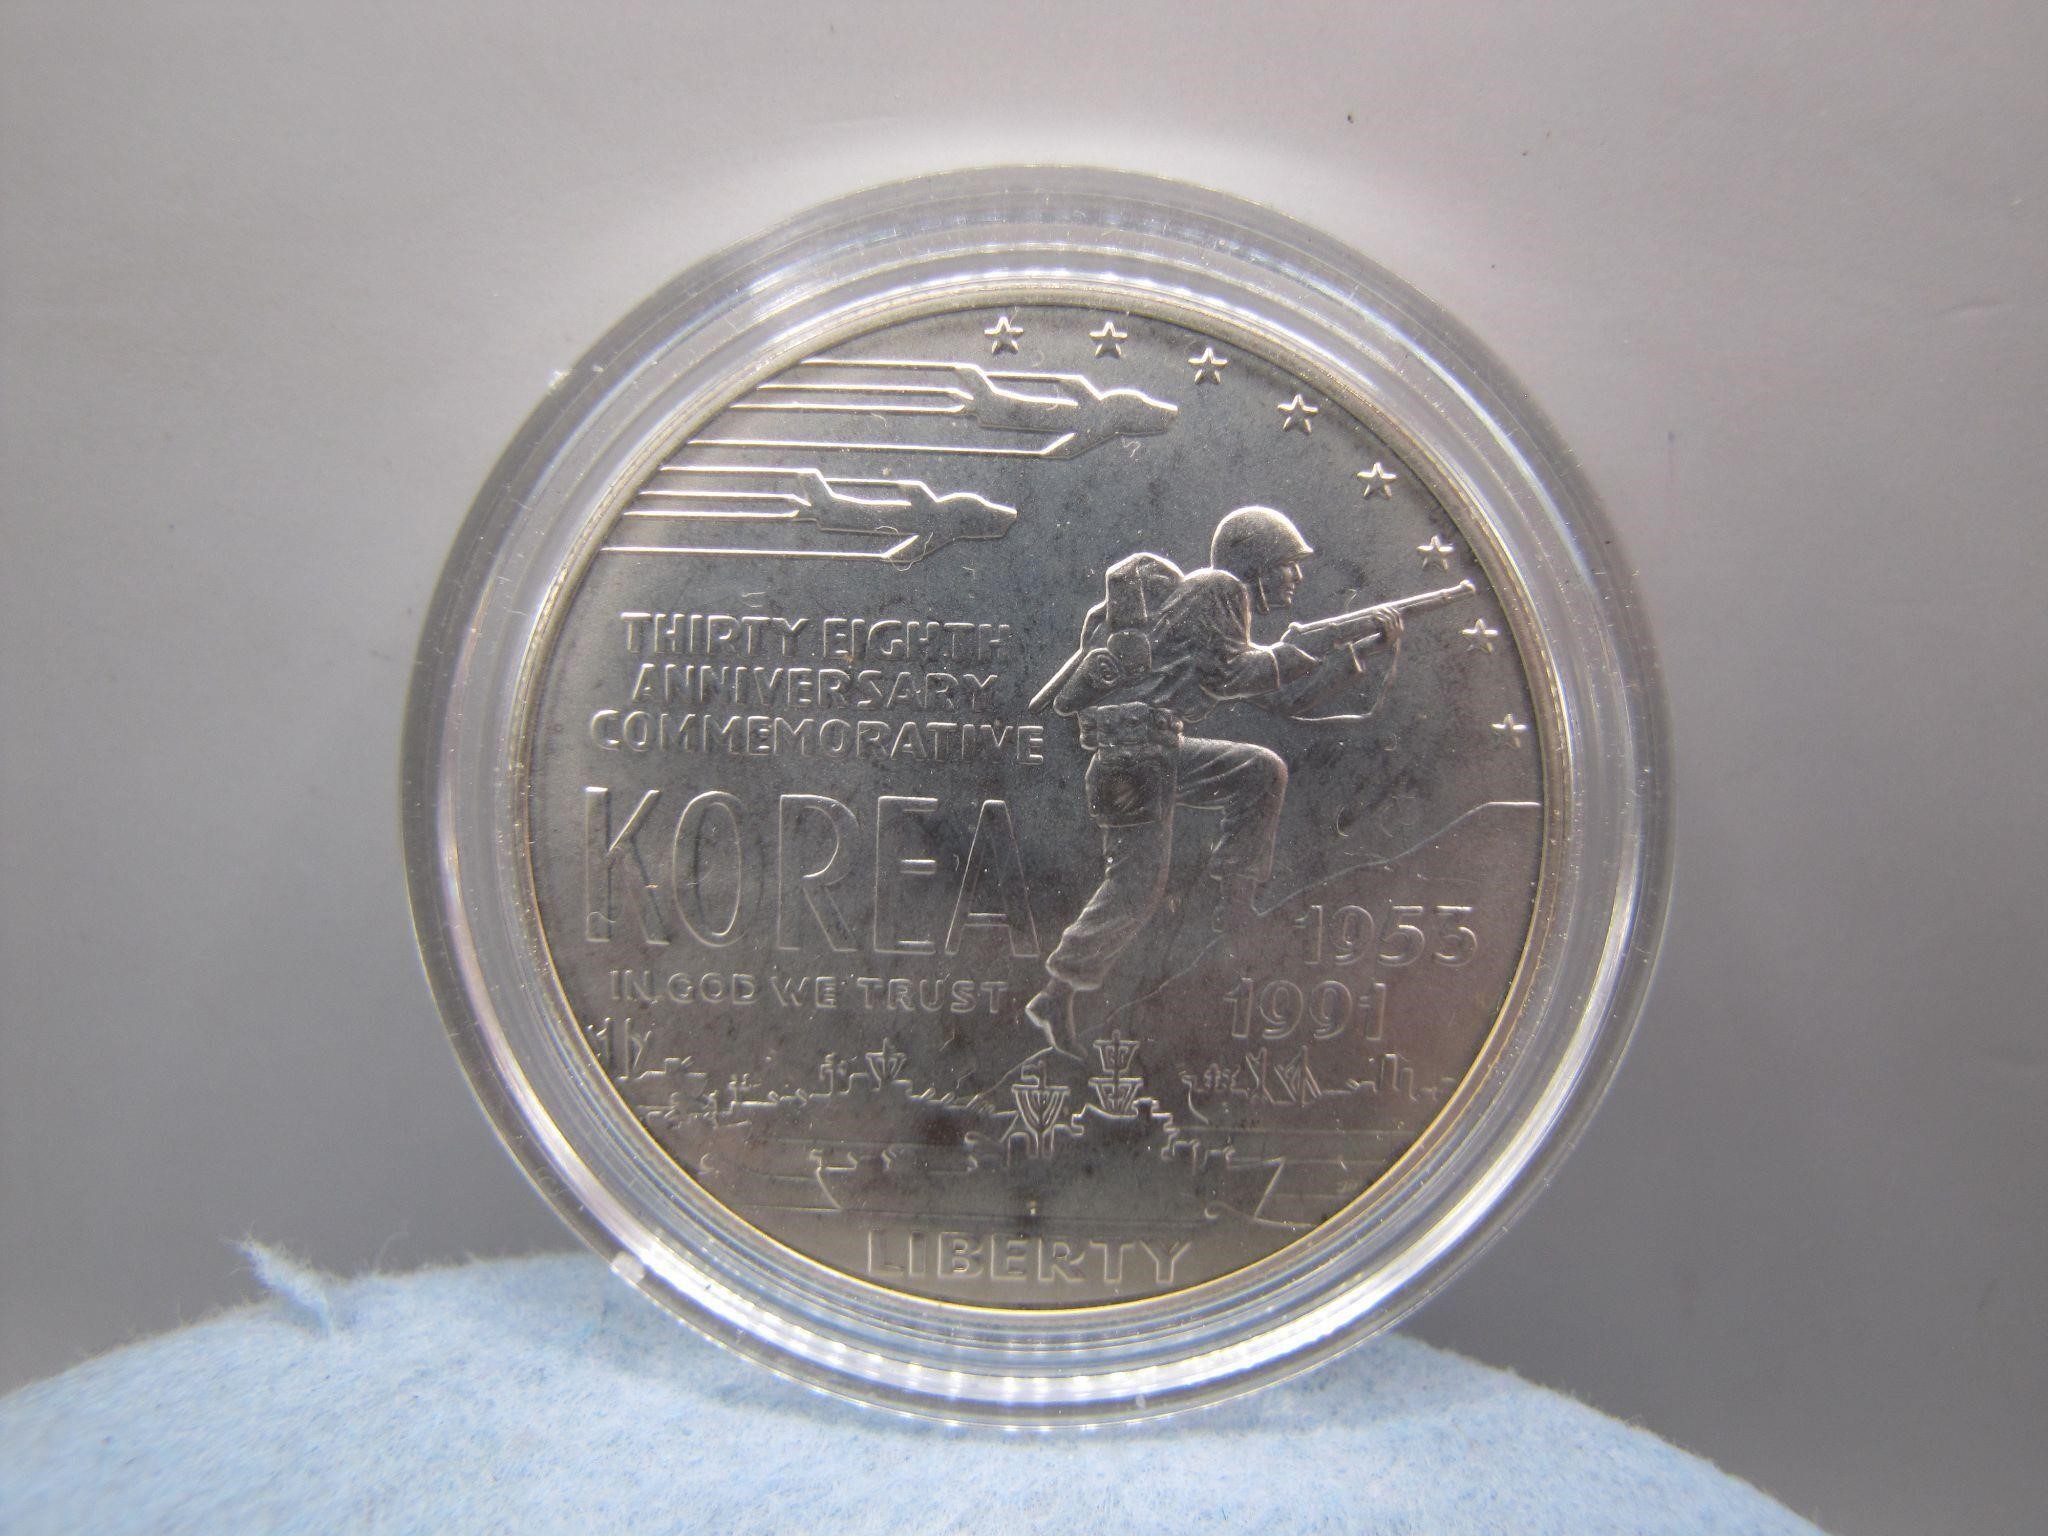 Commemorative Silver Dollar "Korea"